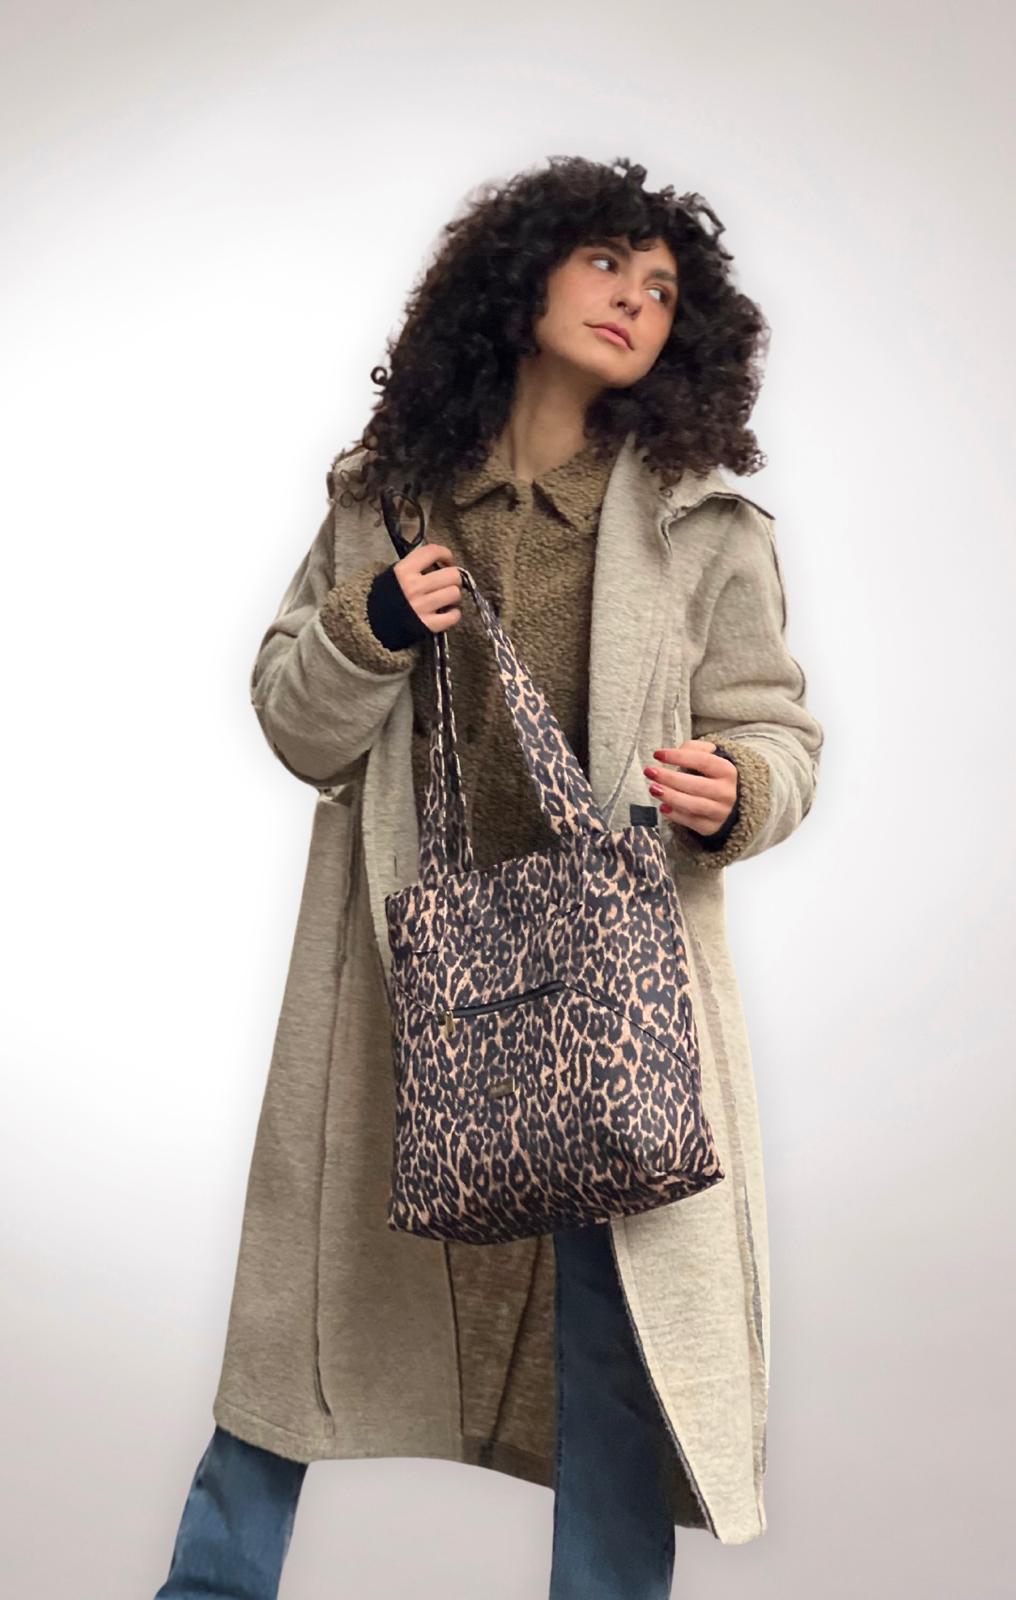 New Leopard Tommy Side Bag - Chilla Vegan Bags